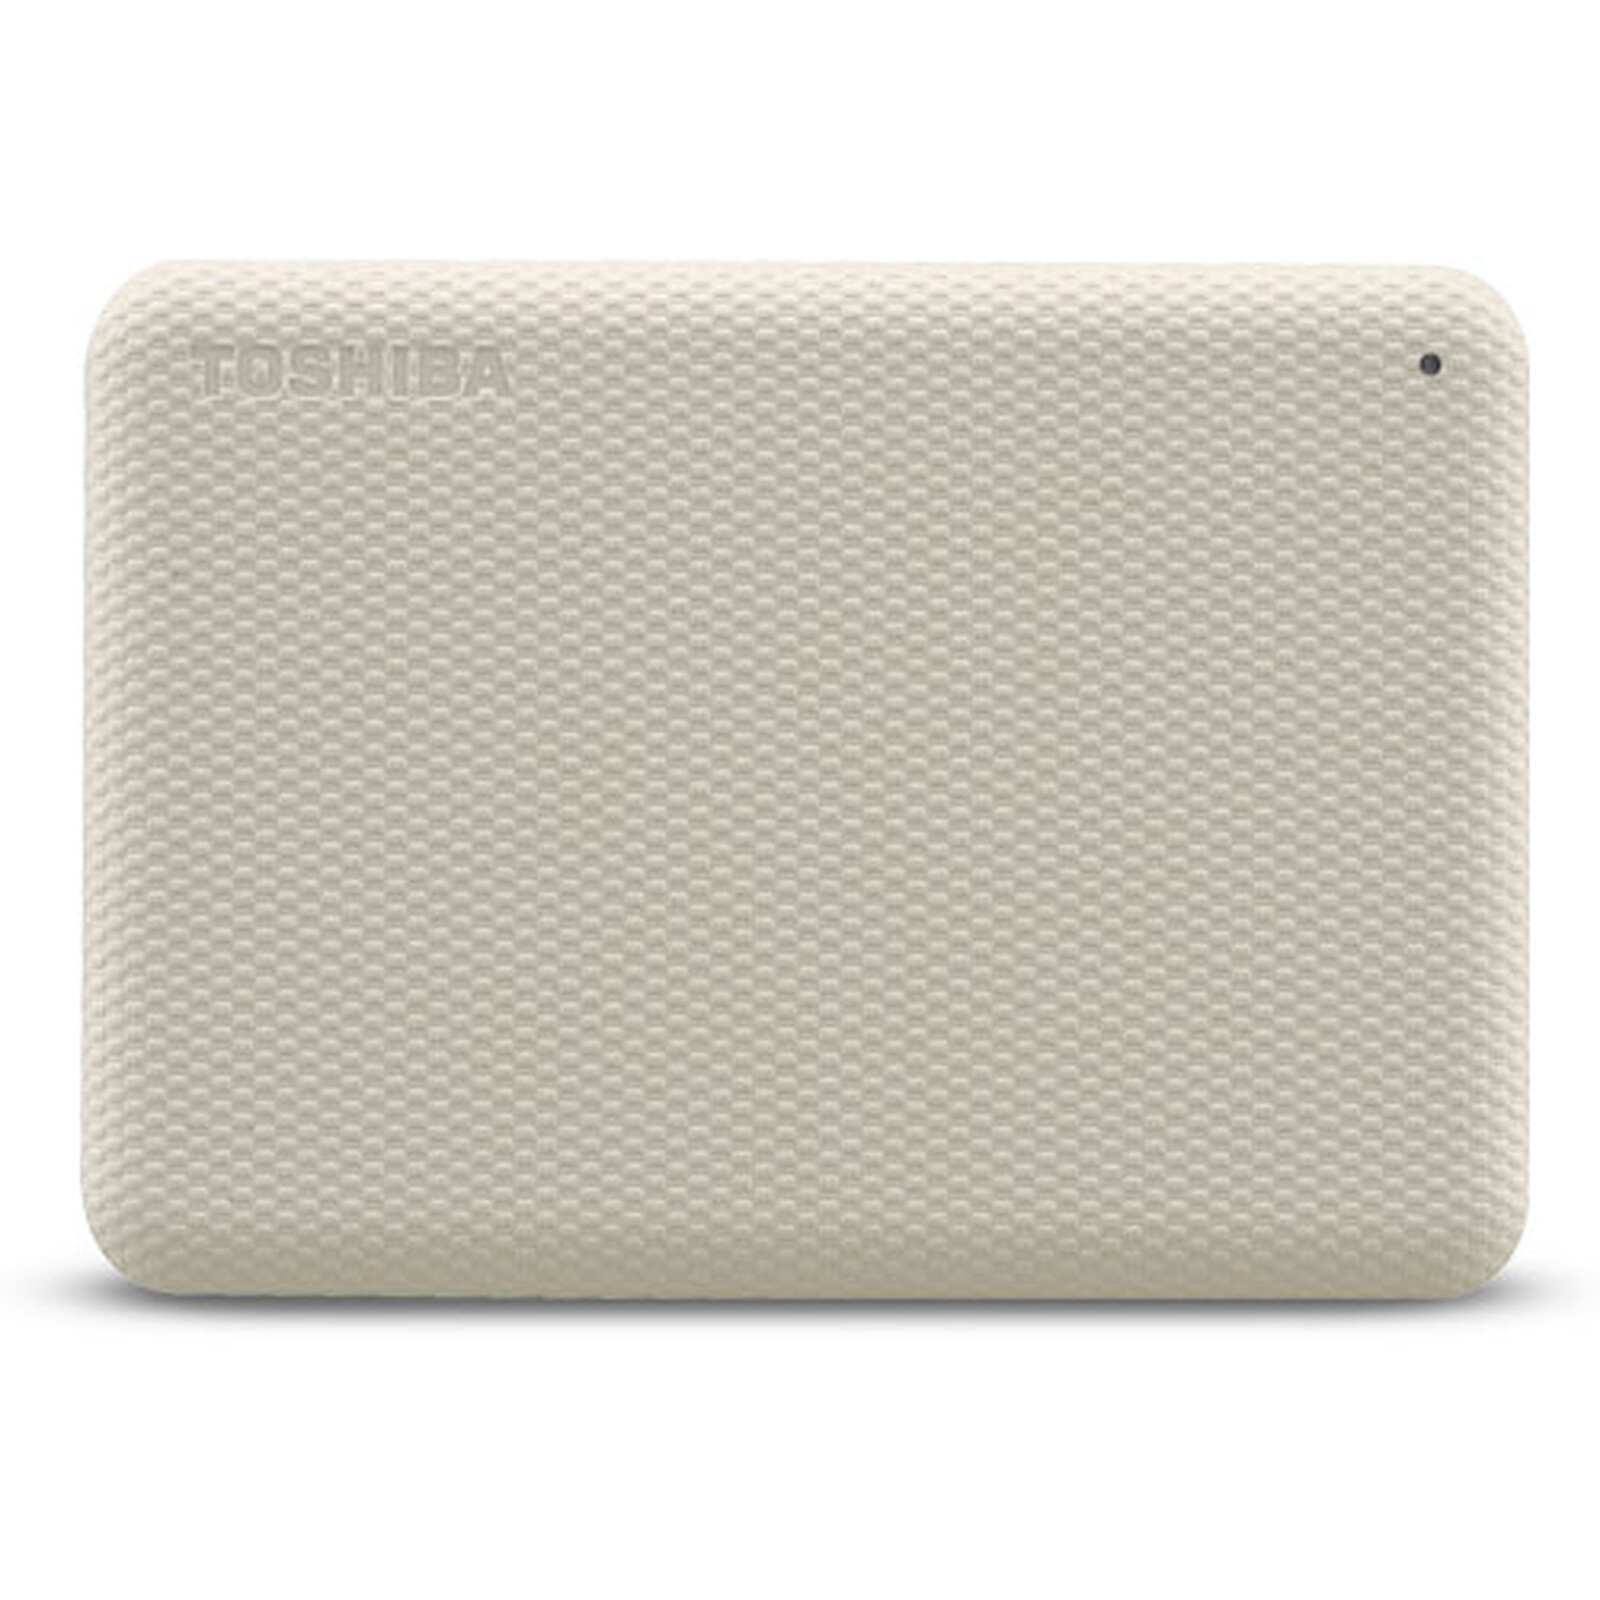 Toshiba Canvio Advance Blanc - 4 To - Disque dur externe Toshiba sur